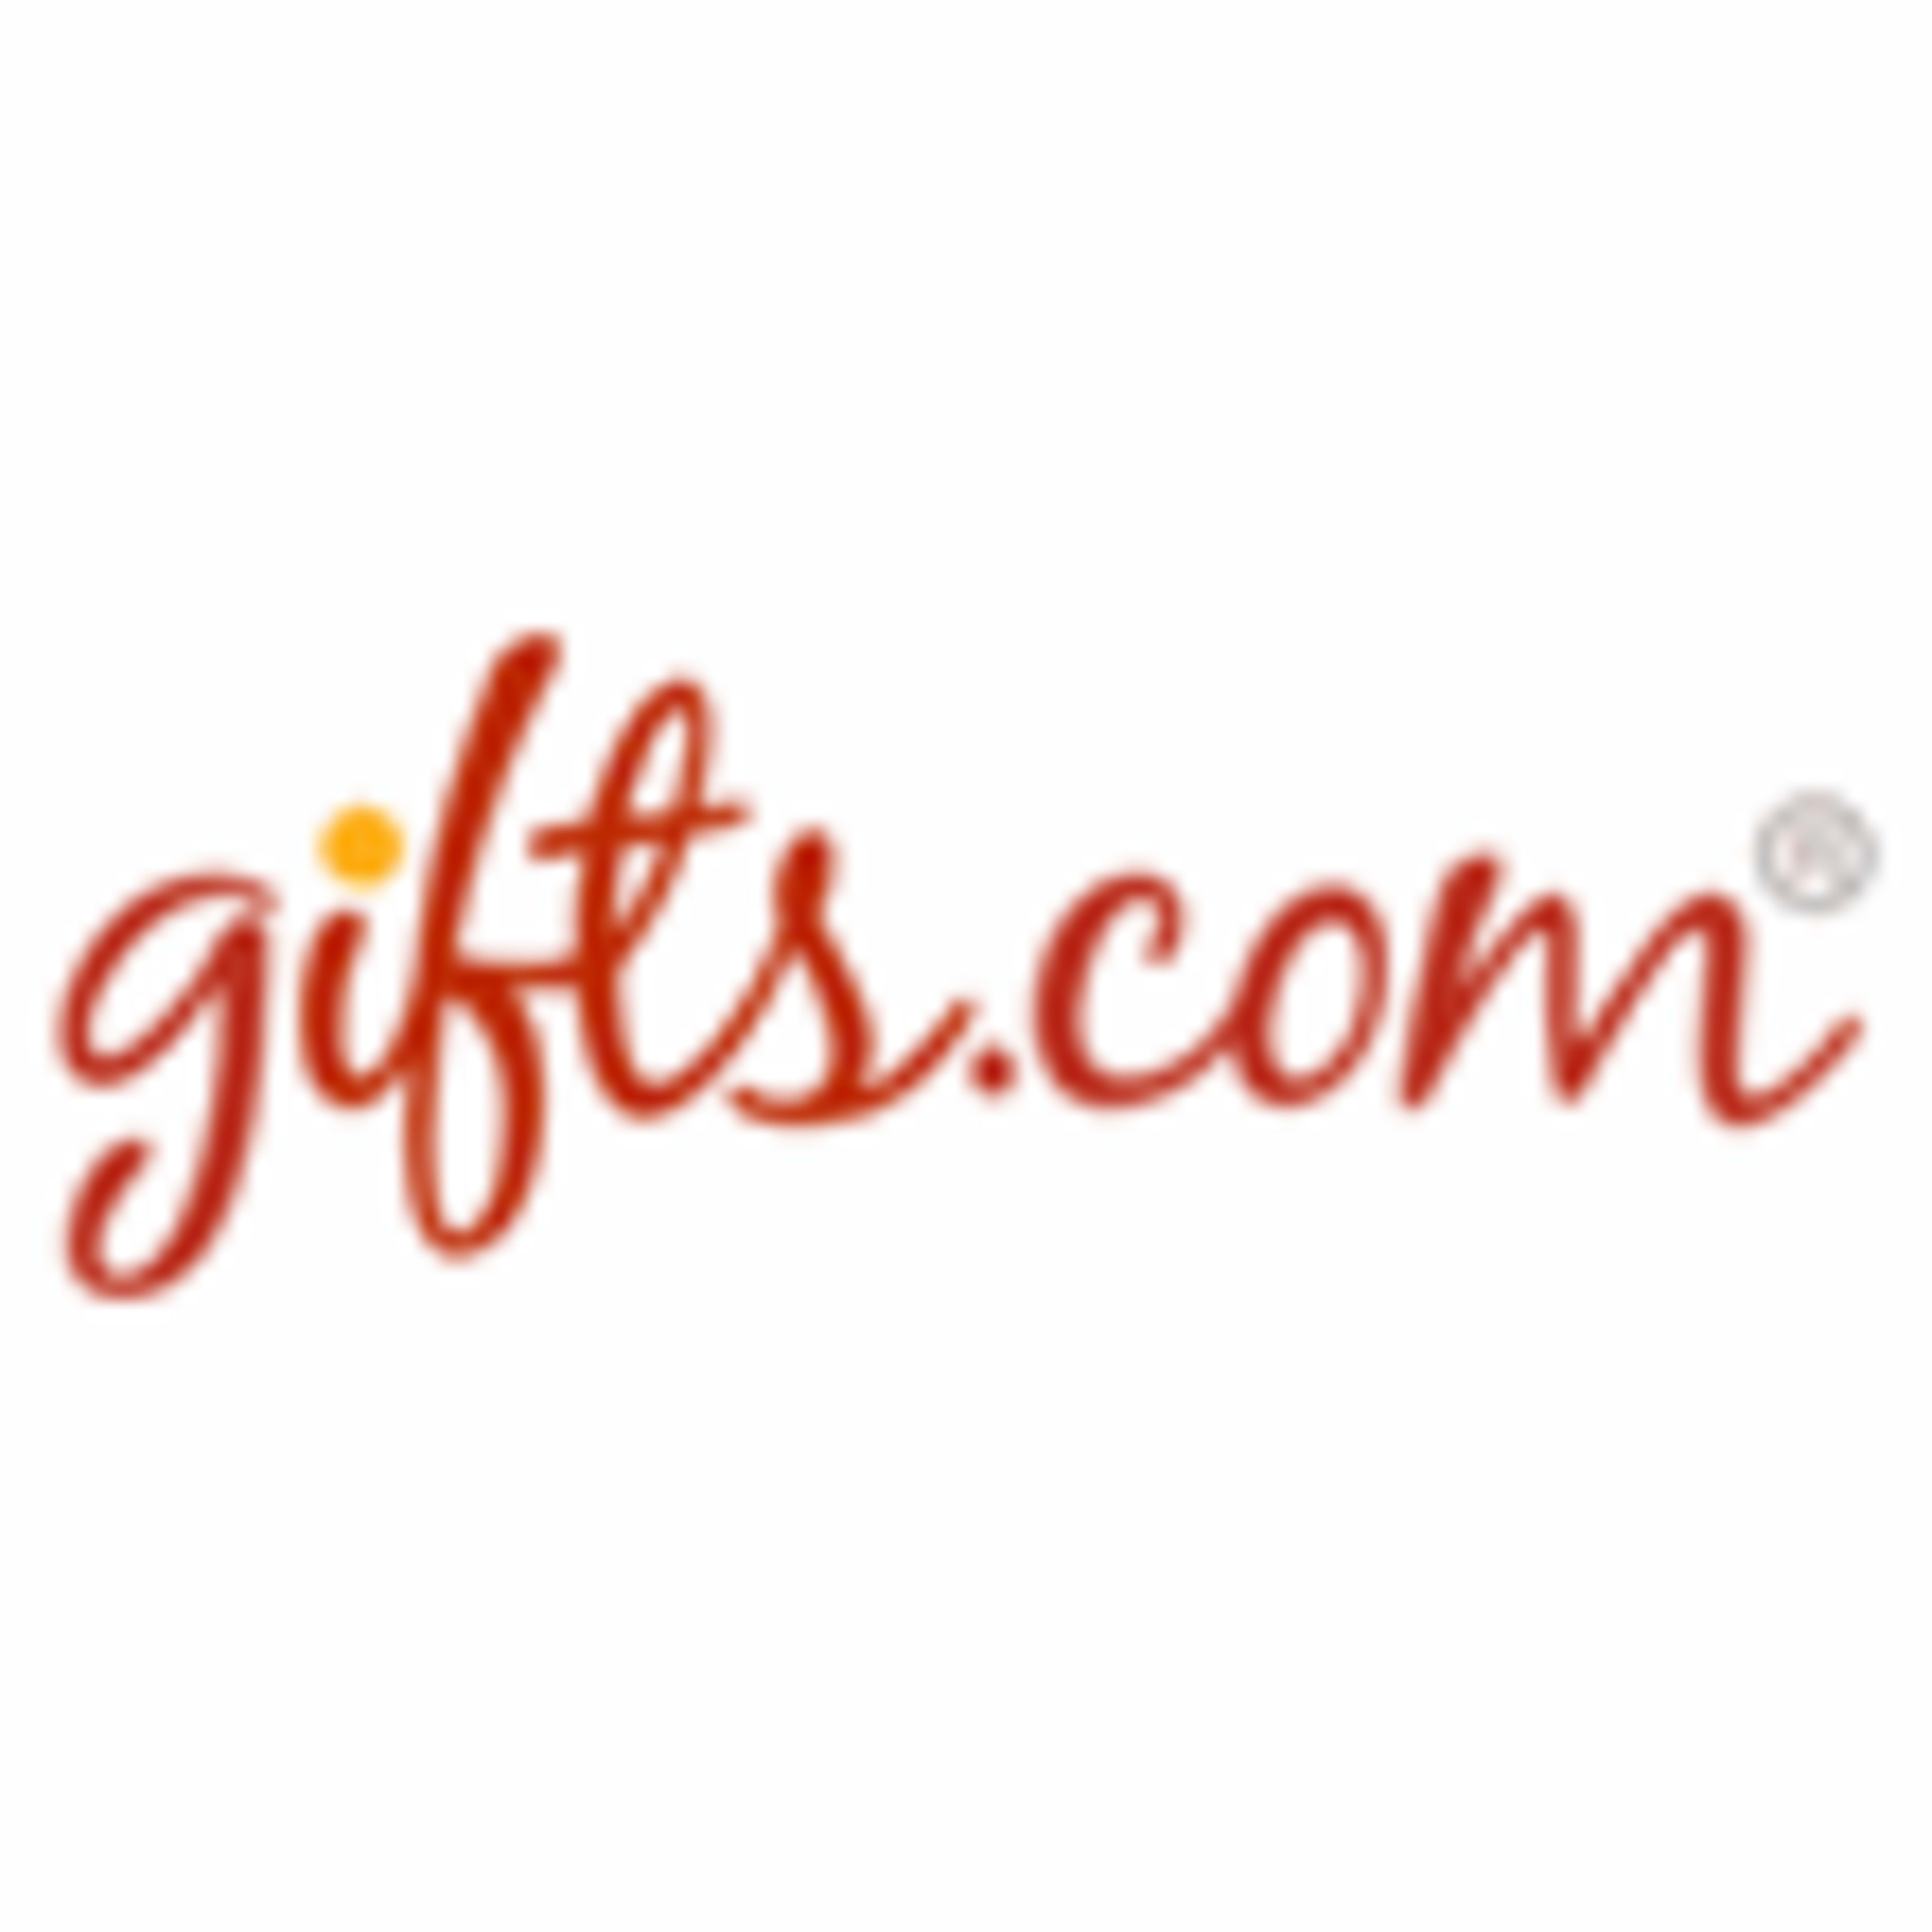 Gifts.com Code